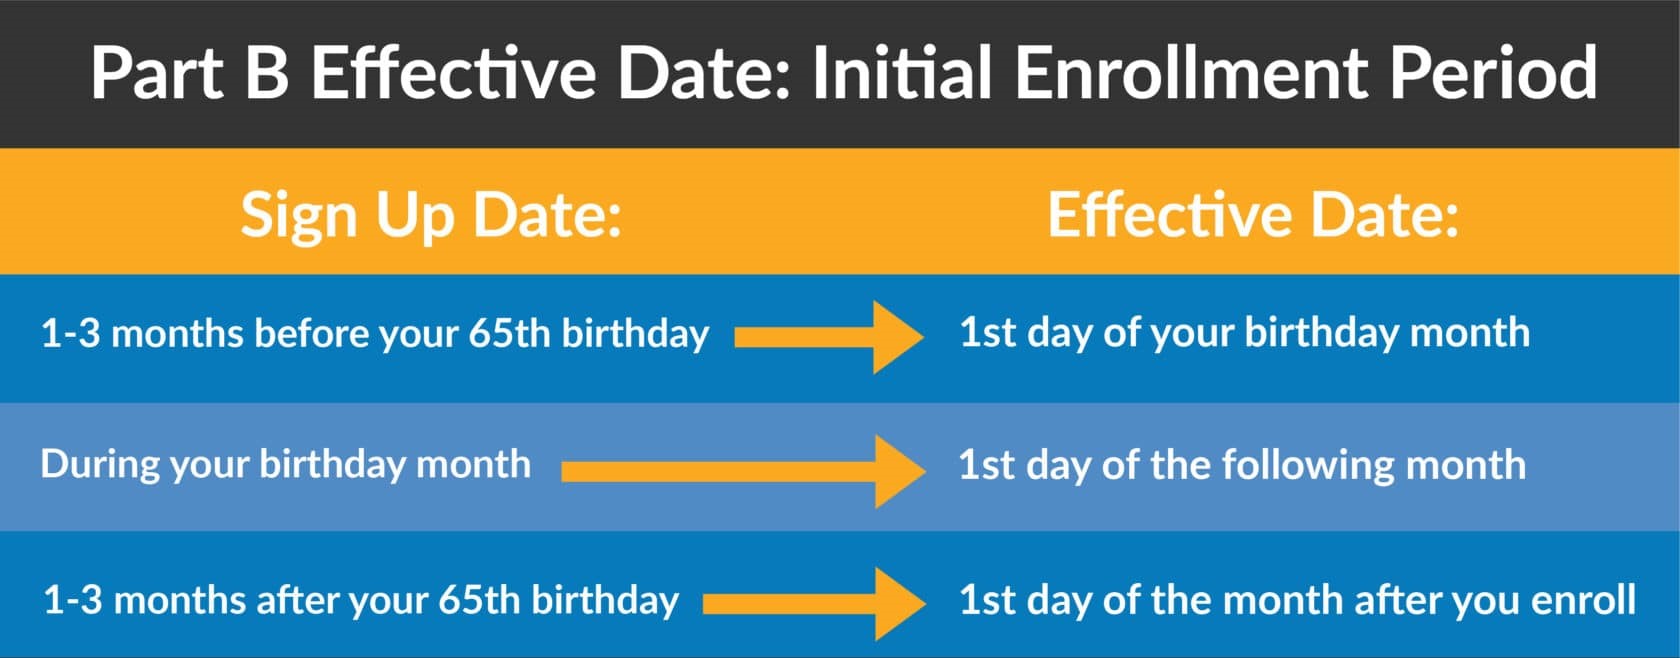 initial-enrollment-period image.jpg